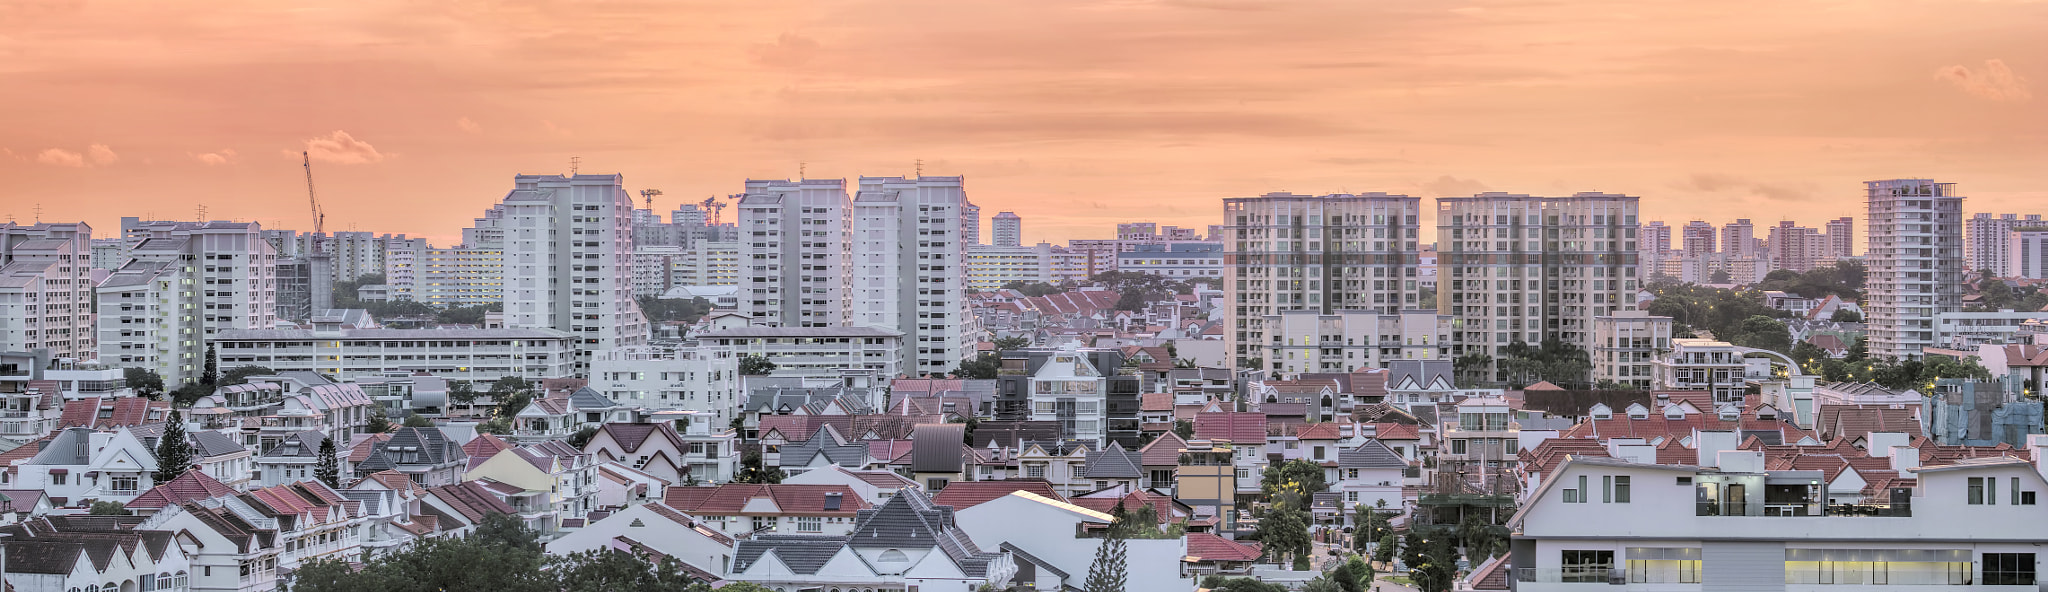 Kembangan Residential Area in Singapore